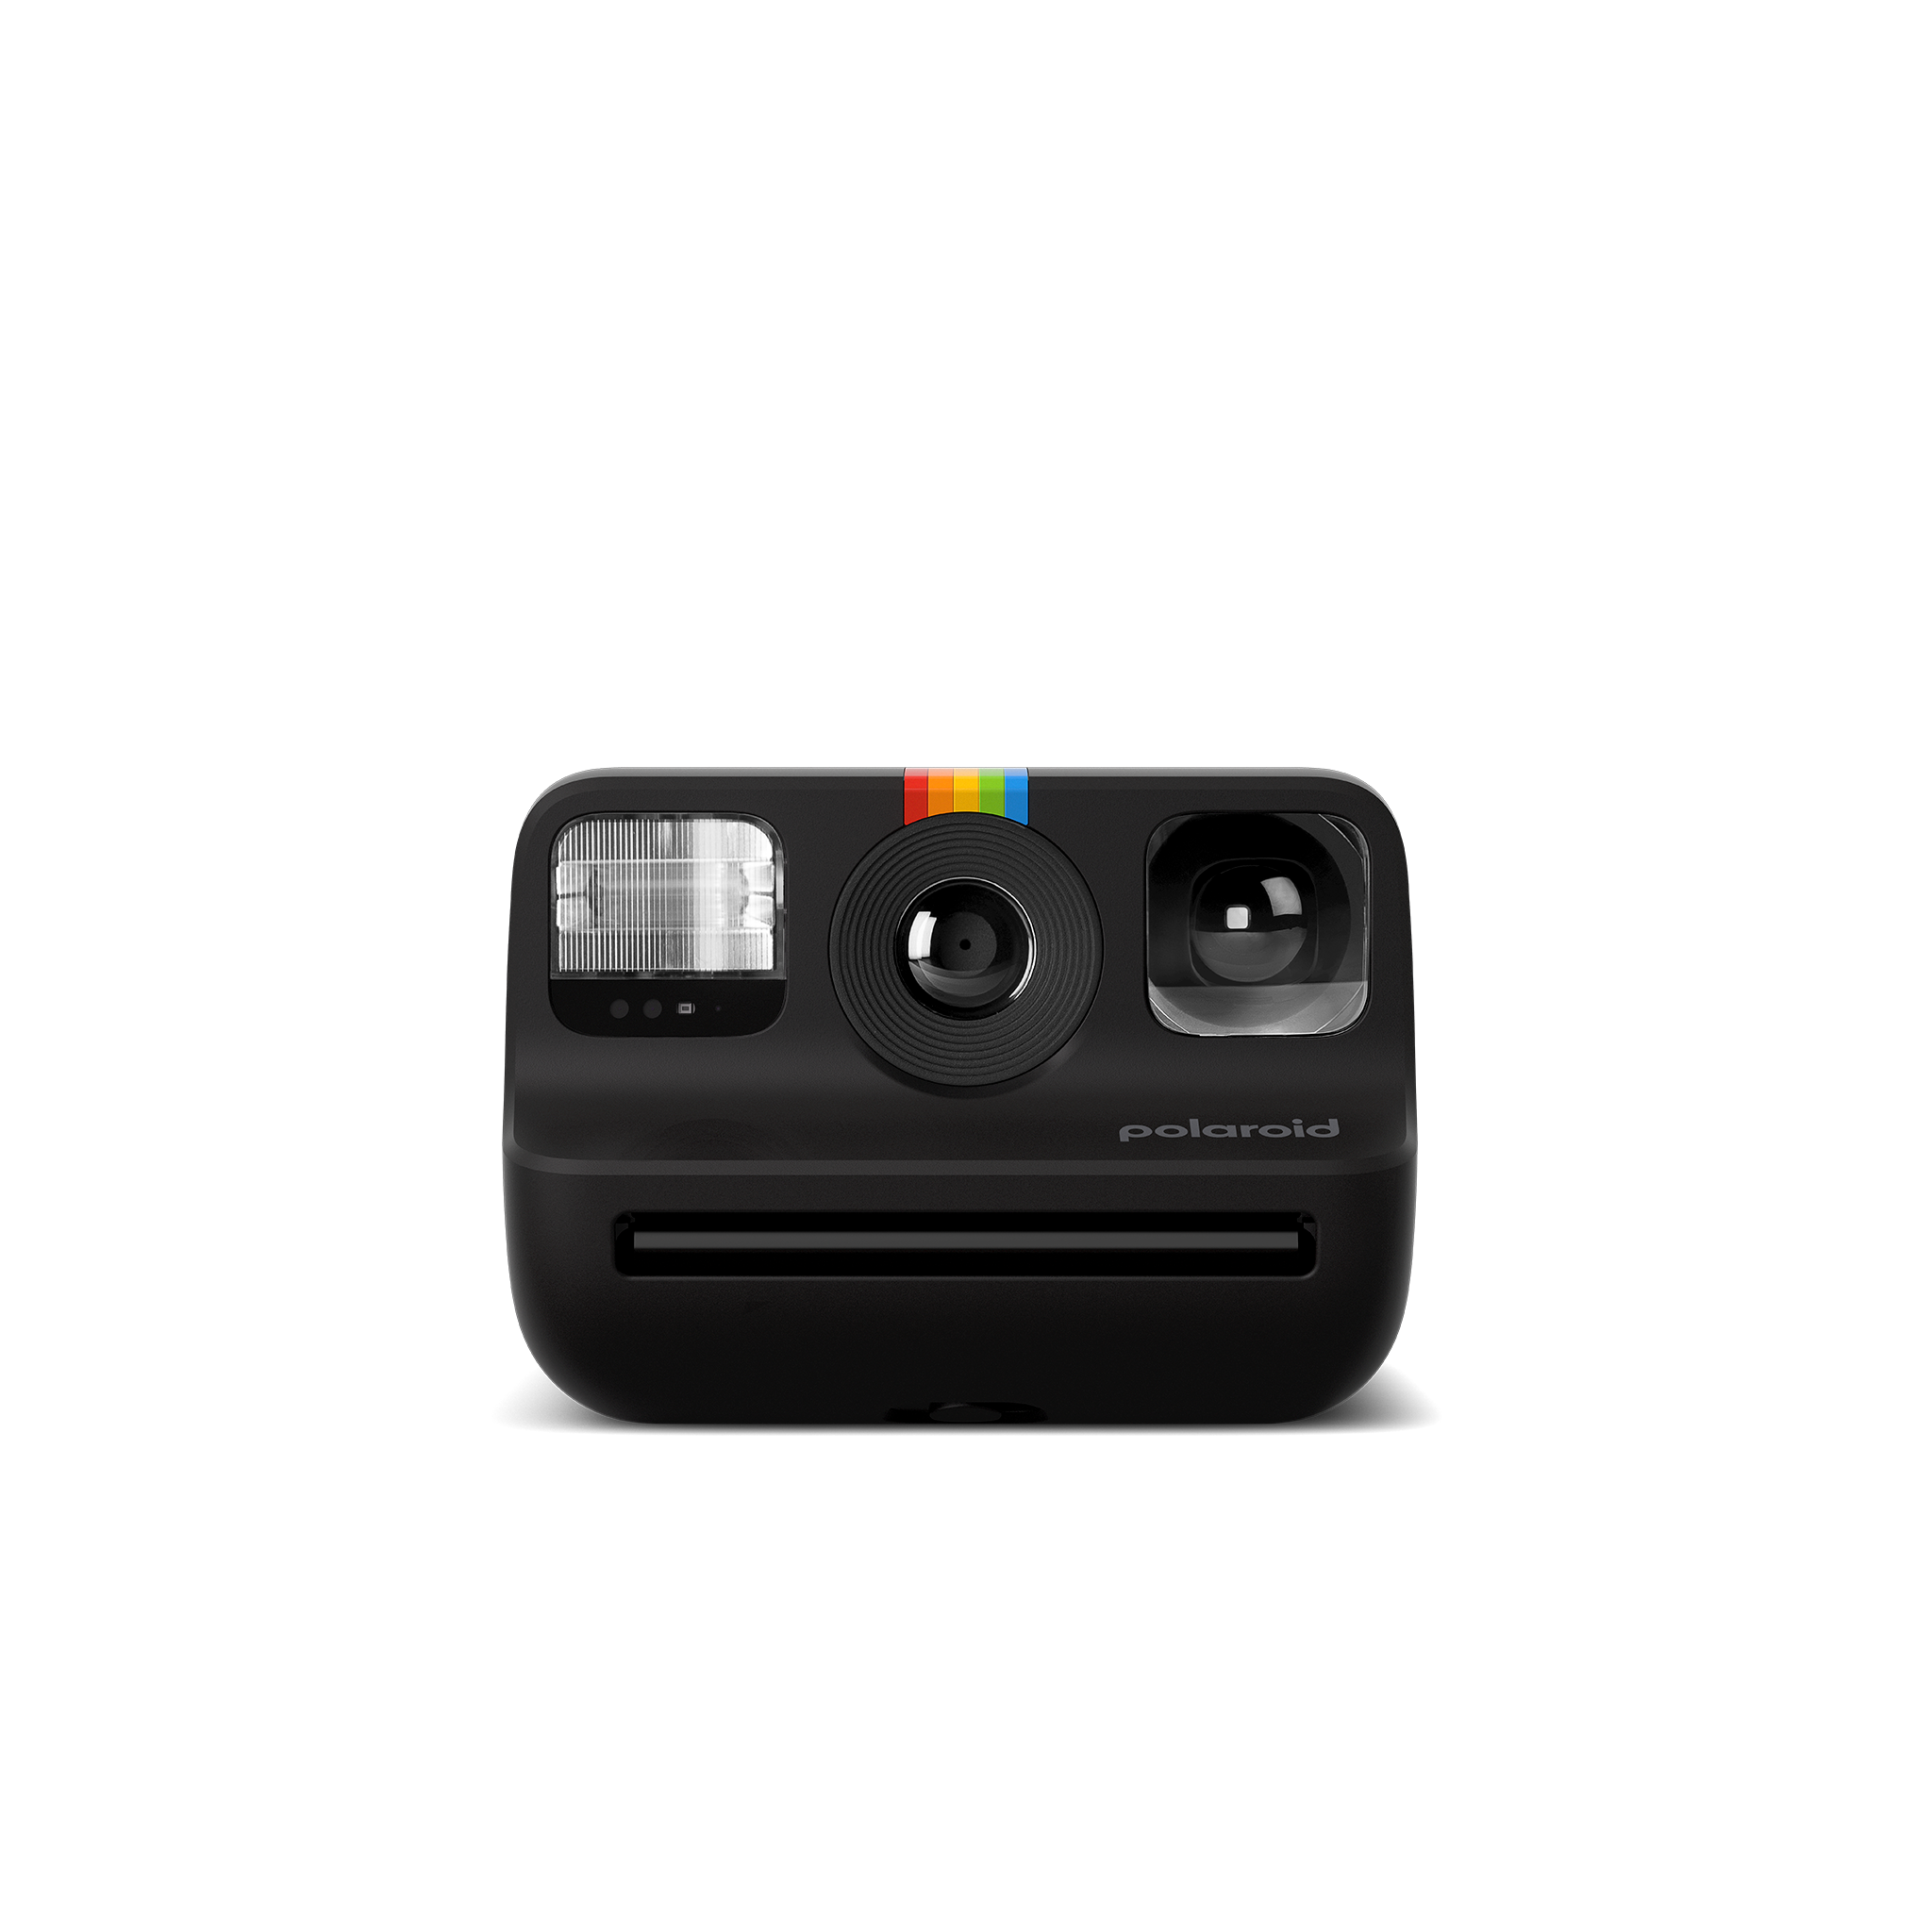 Polaroid Go pocket-size instant analog camera has a self-timer and adorable  design » Gadget Flow